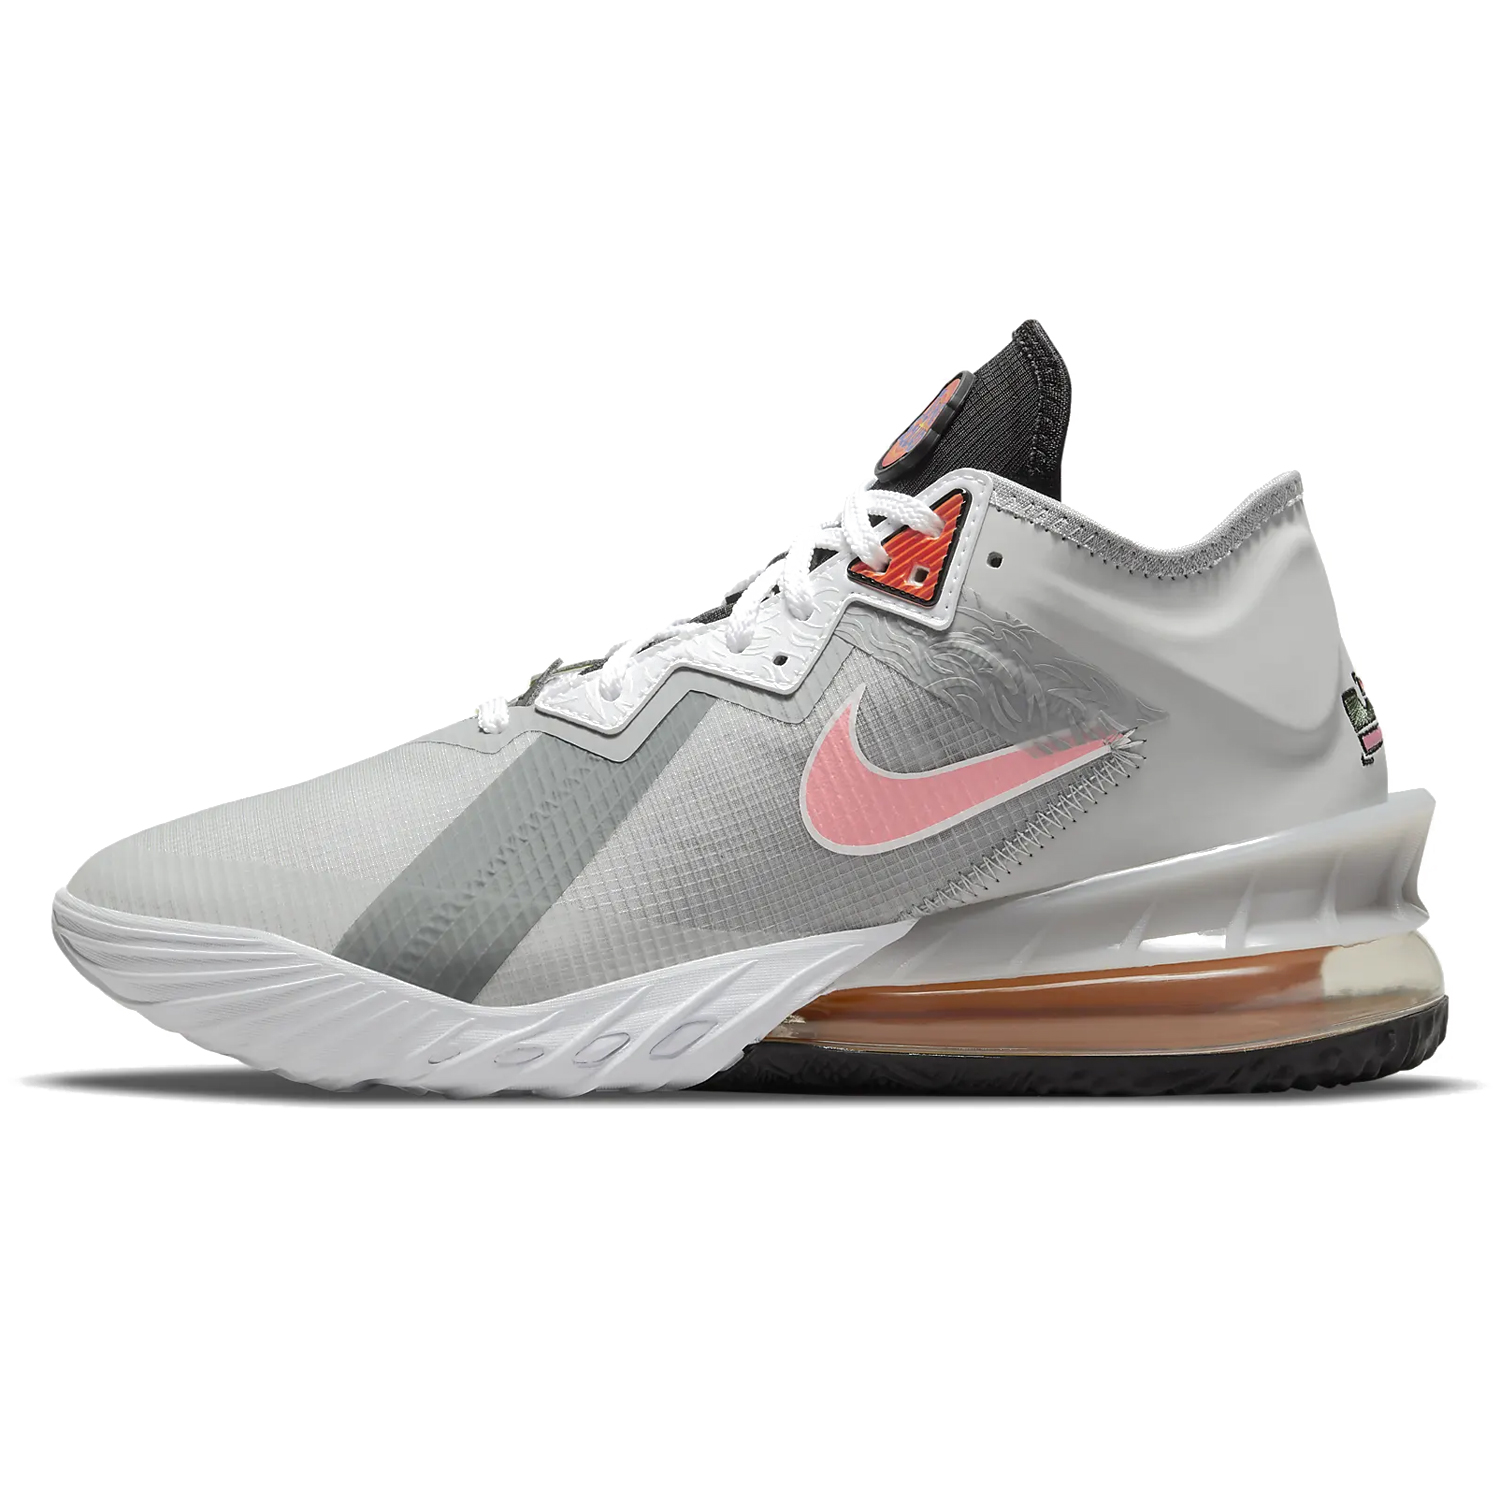 Nike LeBron 18 Low 'Bugs vs Marvin' Space Jam Basketball Shoes CV7562-005 LT SMOKE GREY/SUNSET PULSE-BLACK-WHITE